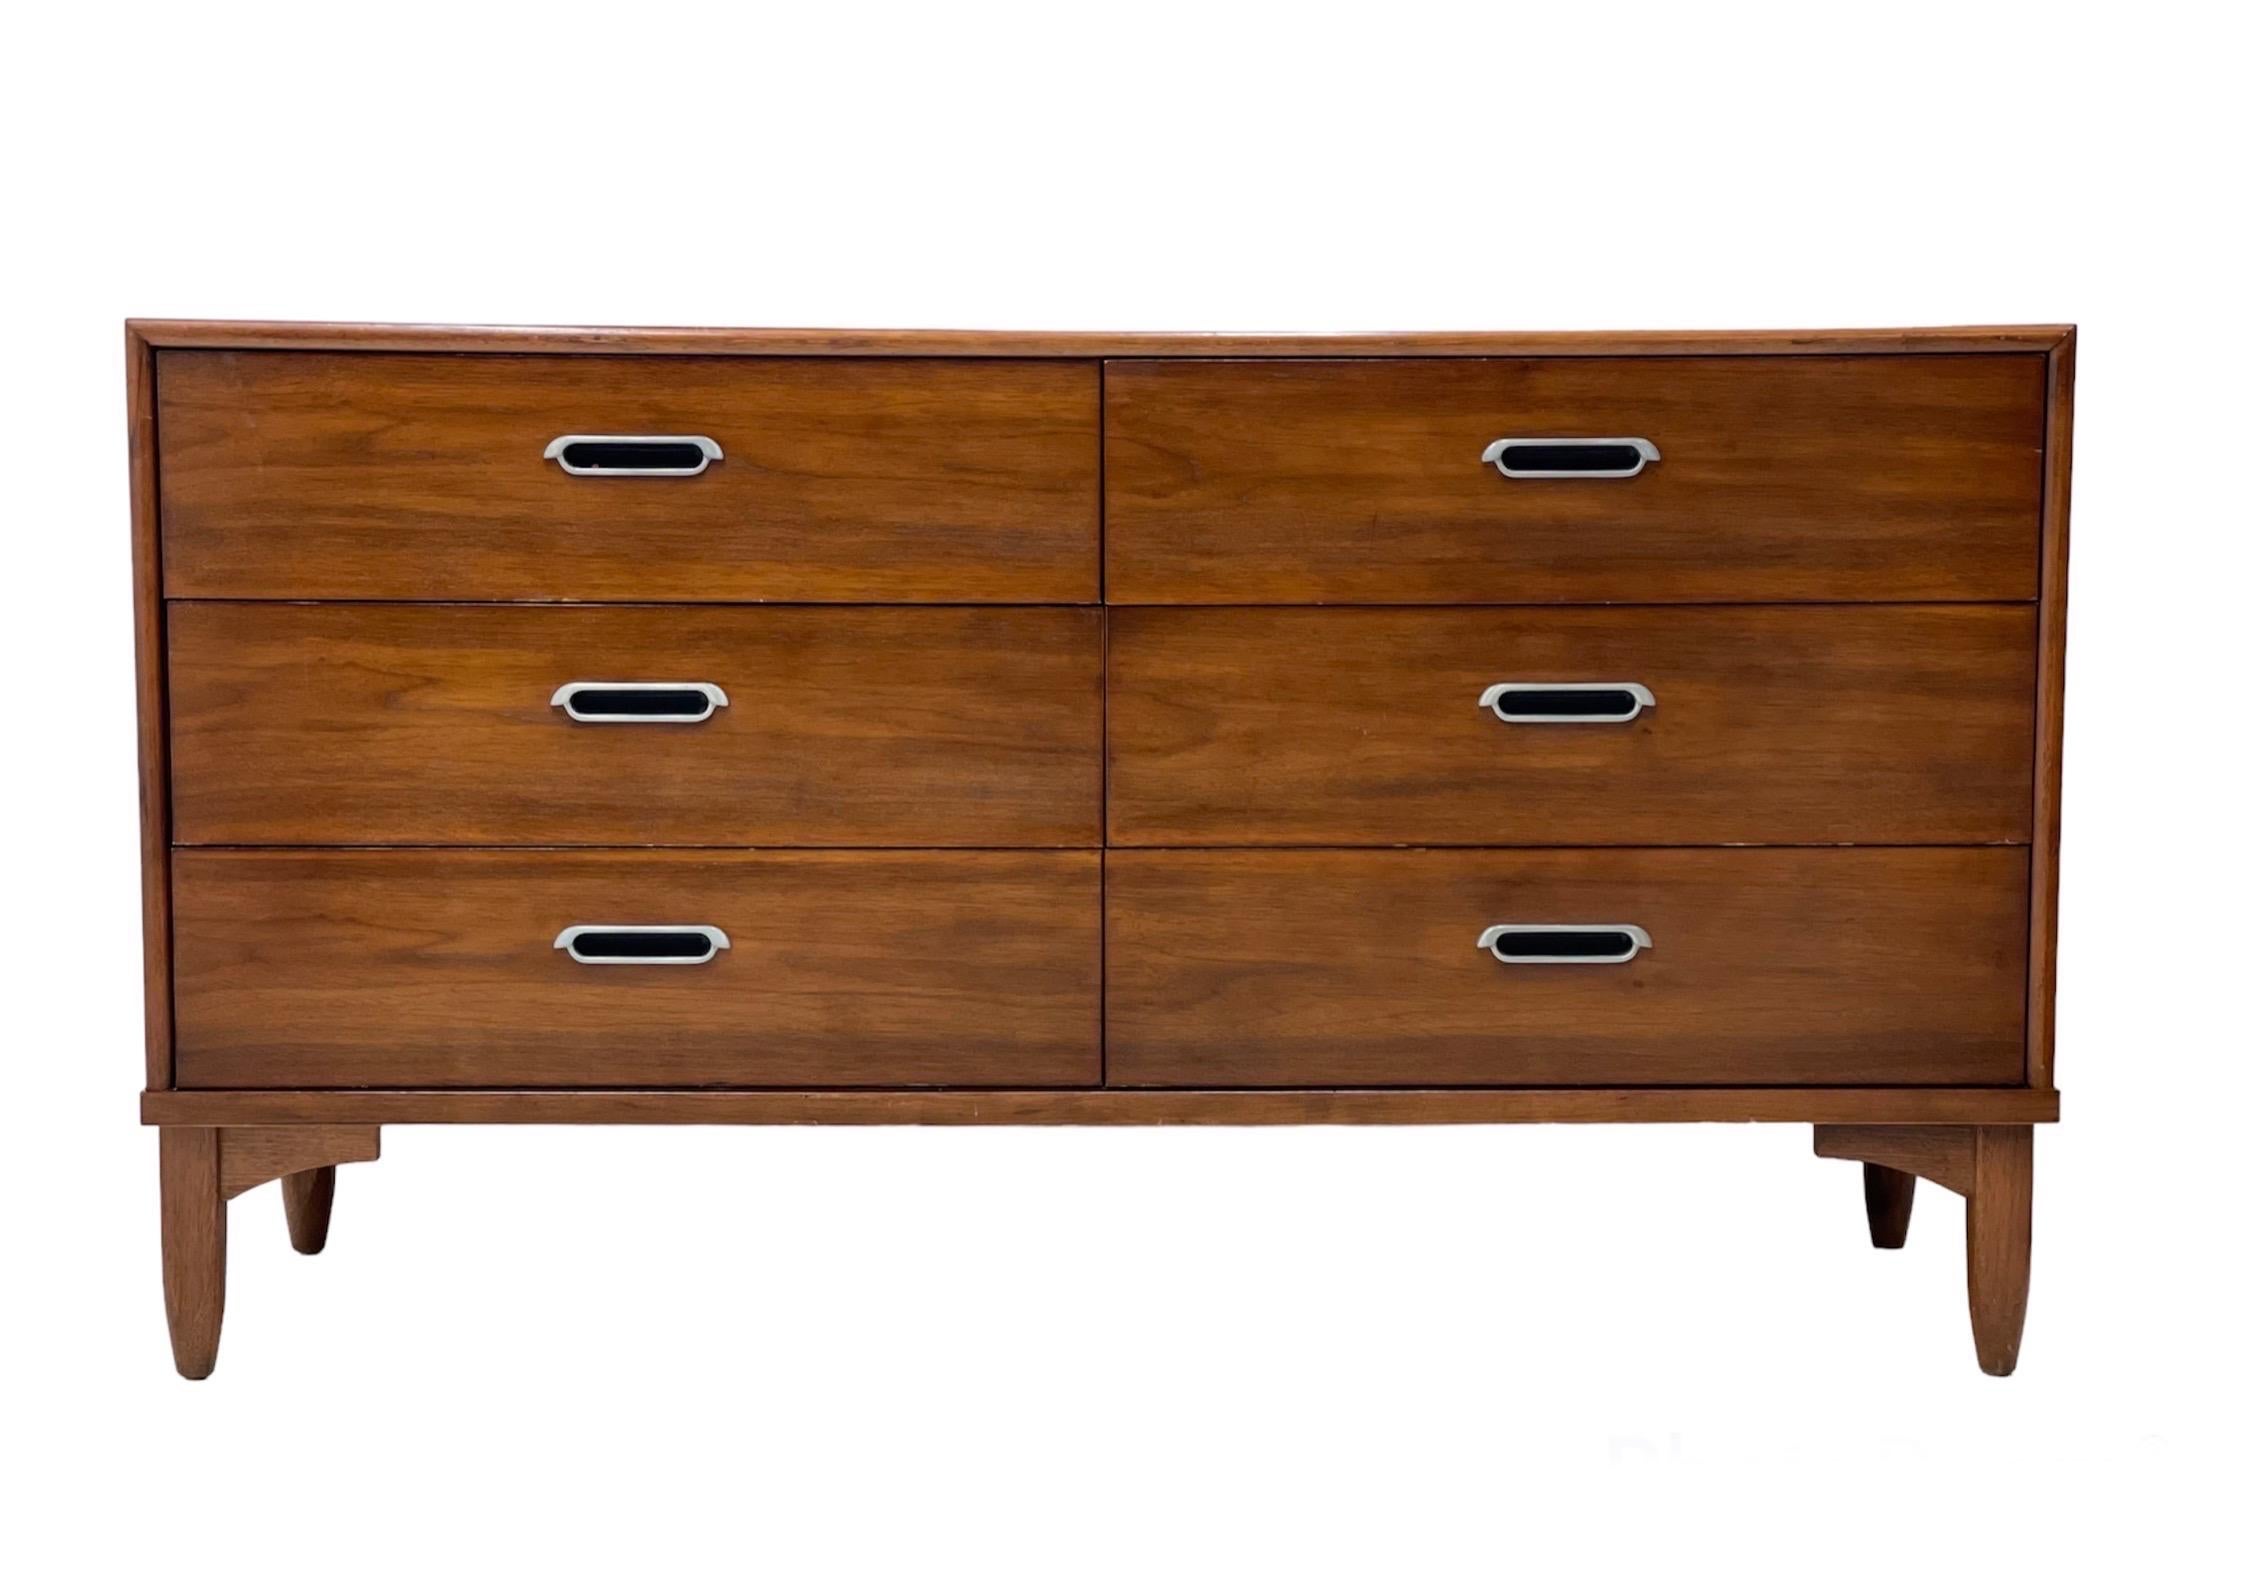 Vintage Drexel lowboy dresser dovetail drawers.

Dimensions: 54 W ; 19 D ; 30 H.